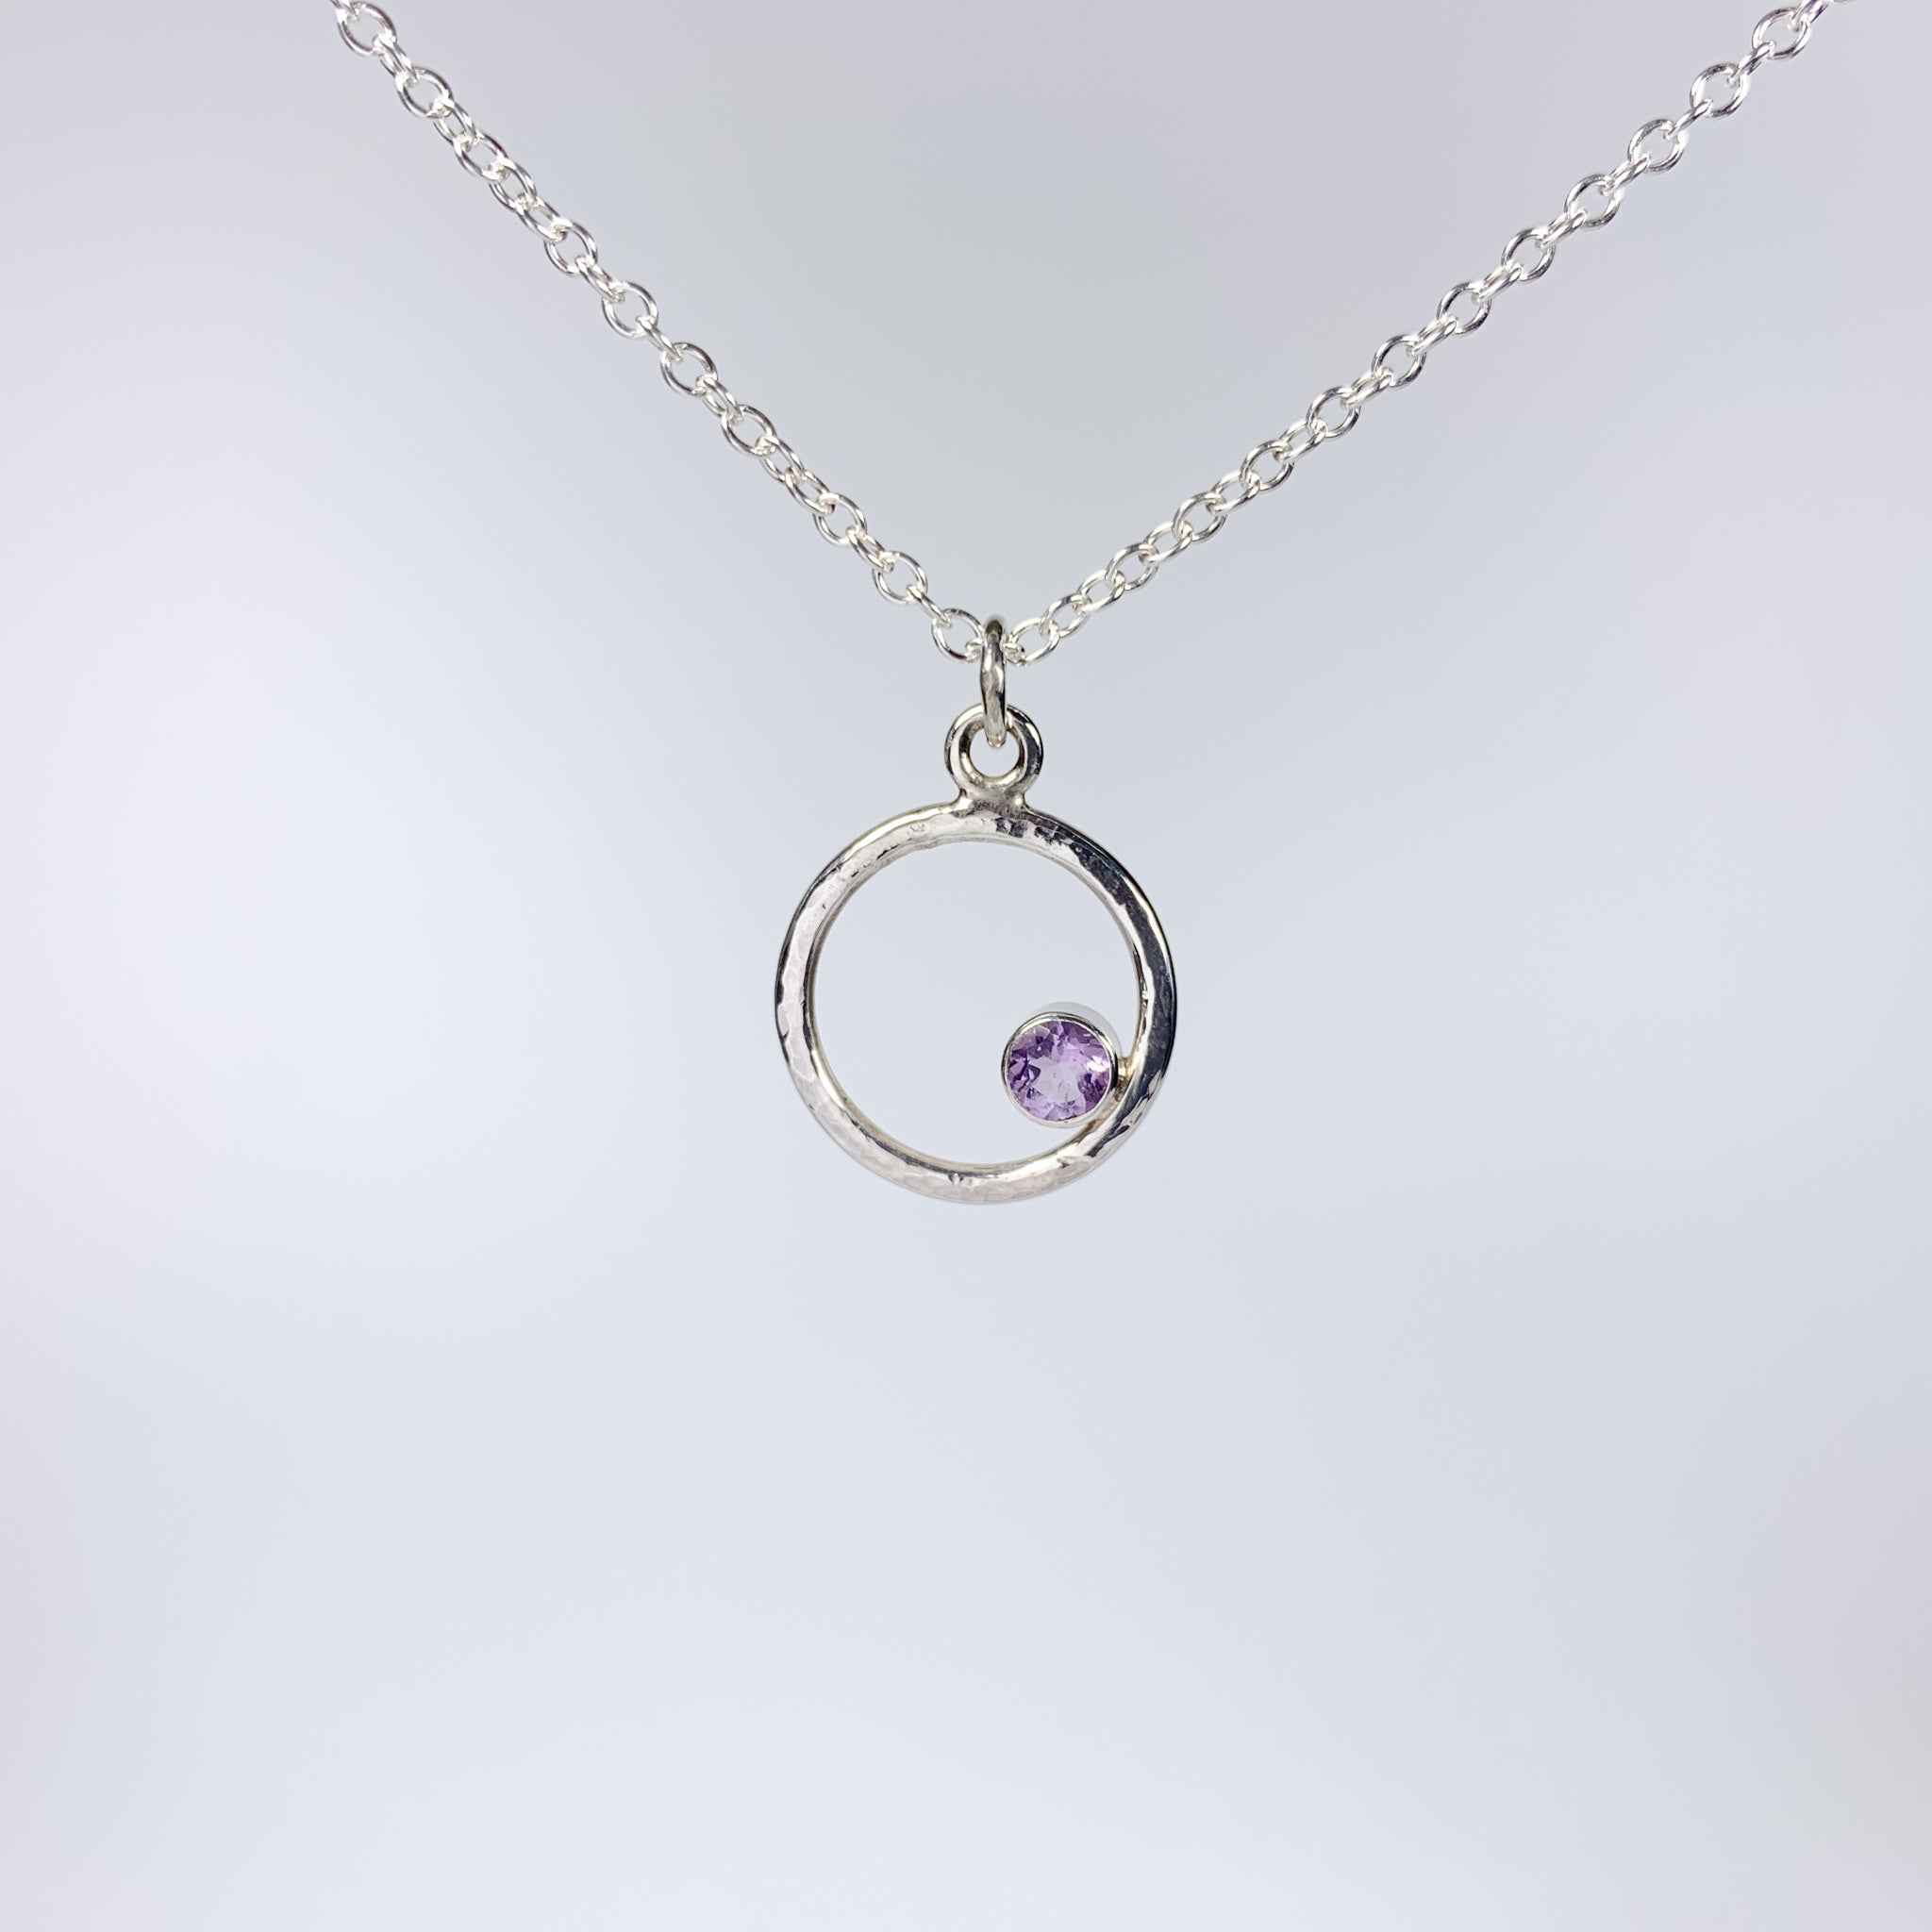 Caldera Eclissi Amethyst Silver Pendant Necklace